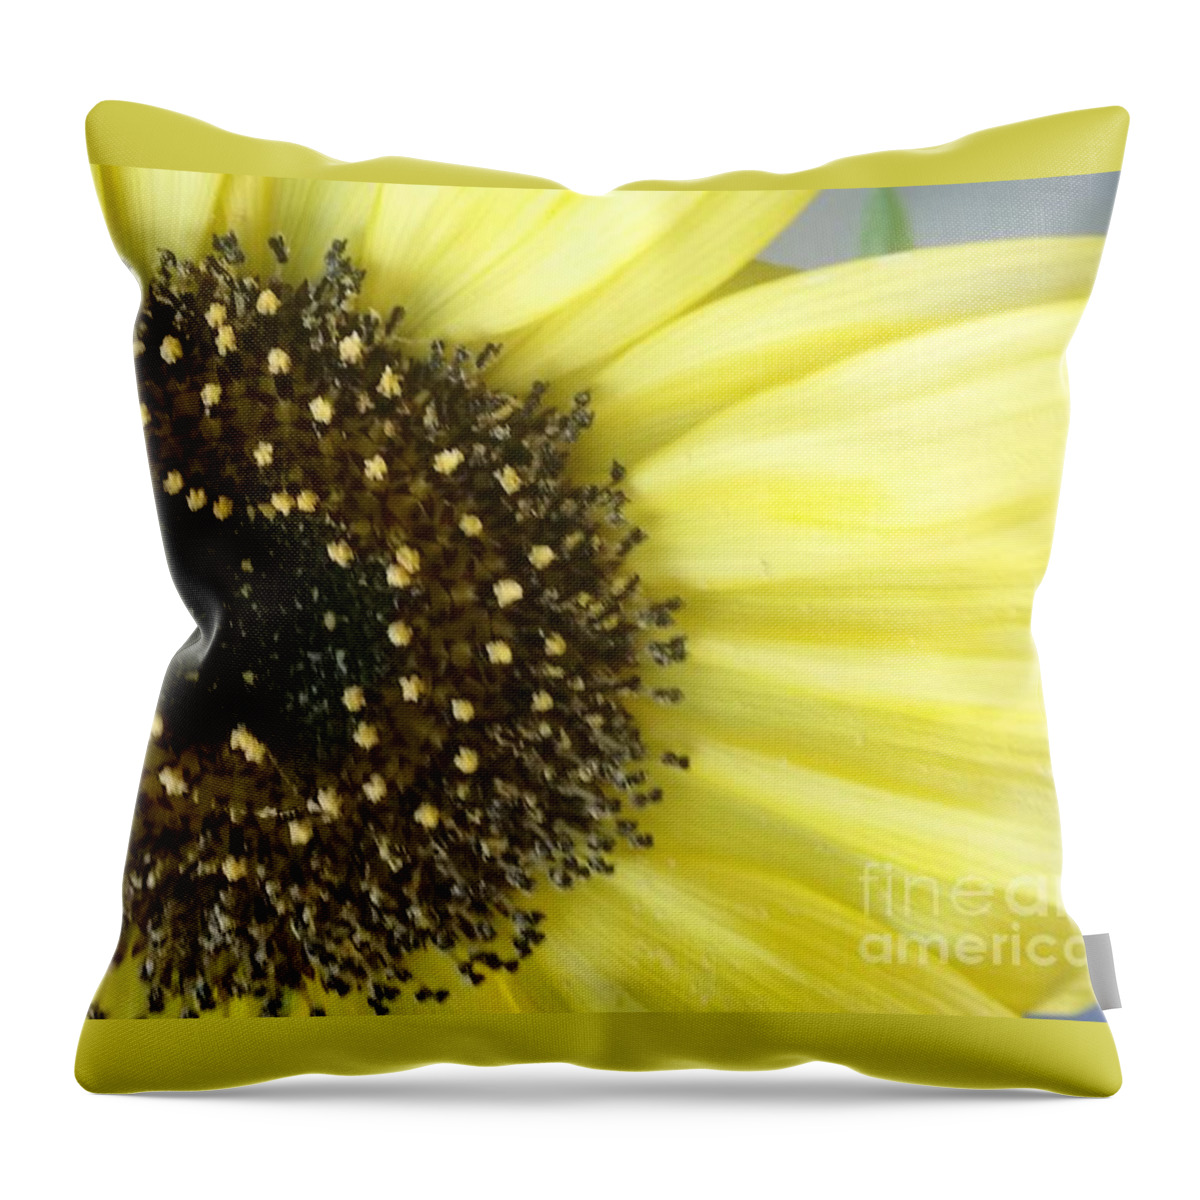 Sunflower Throw Pillow featuring the photograph Sunflower by Seaux-N-Seau Soileau